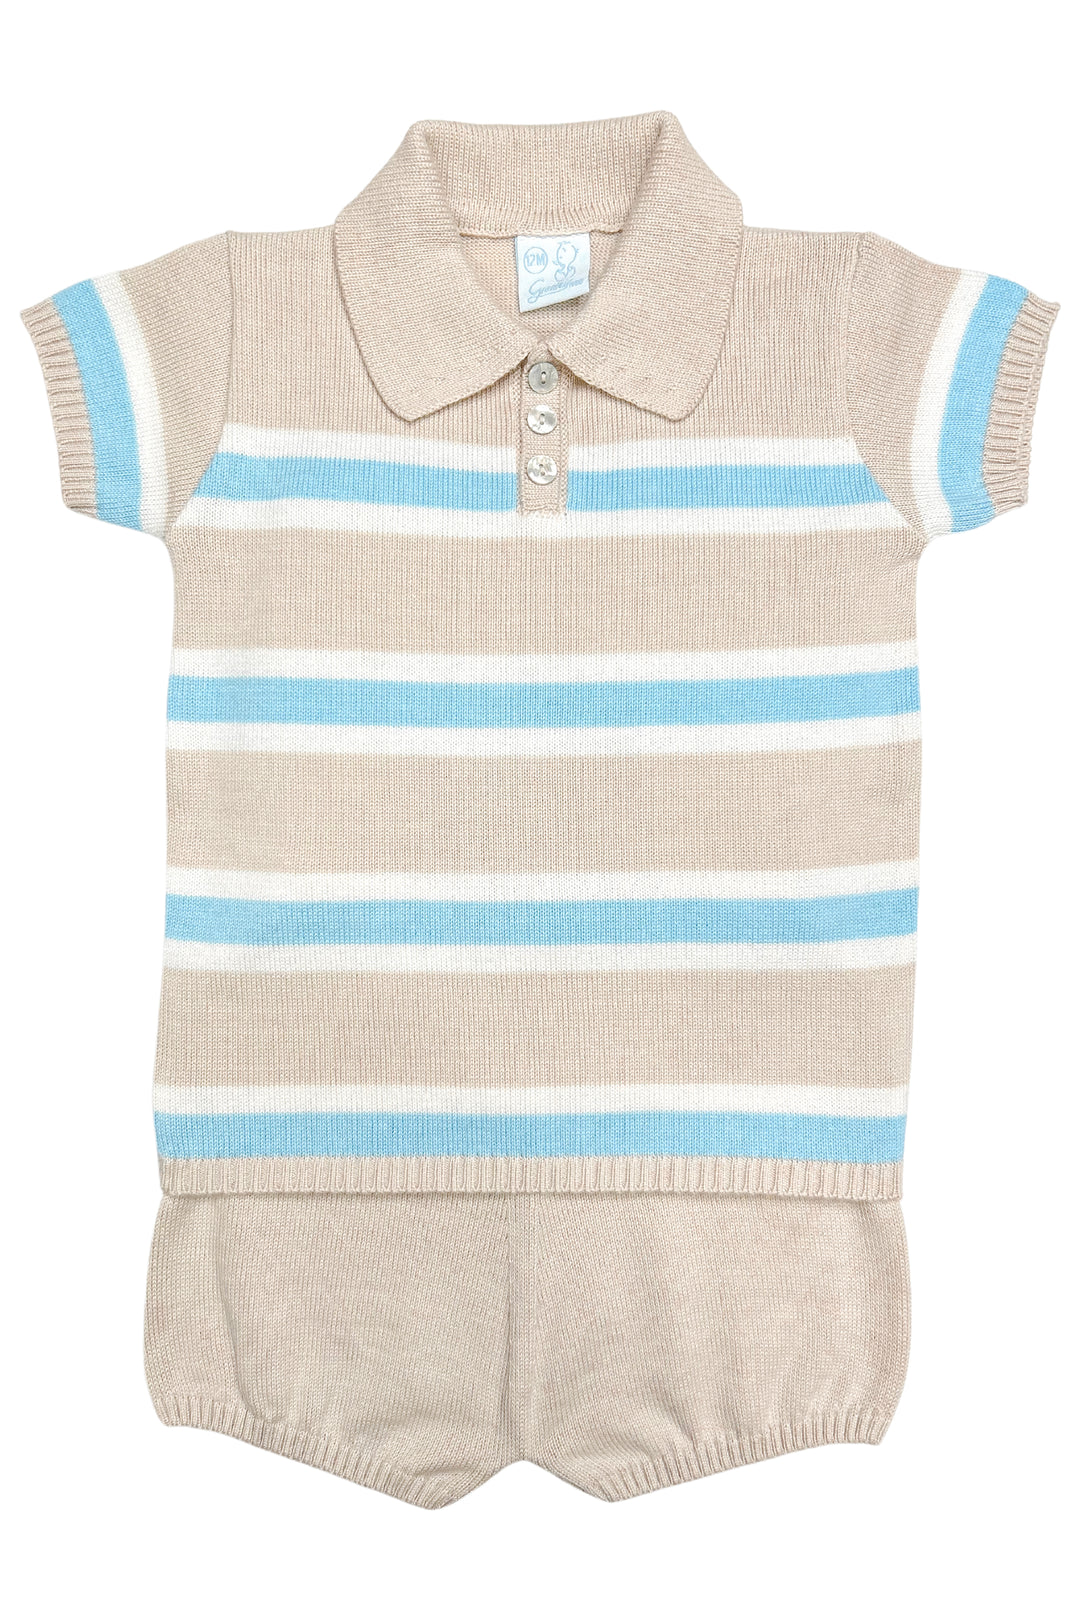 Granlei "Jude" Stone, Cloud Blue & White Stripe Knit Top & Shorts | Millie and John